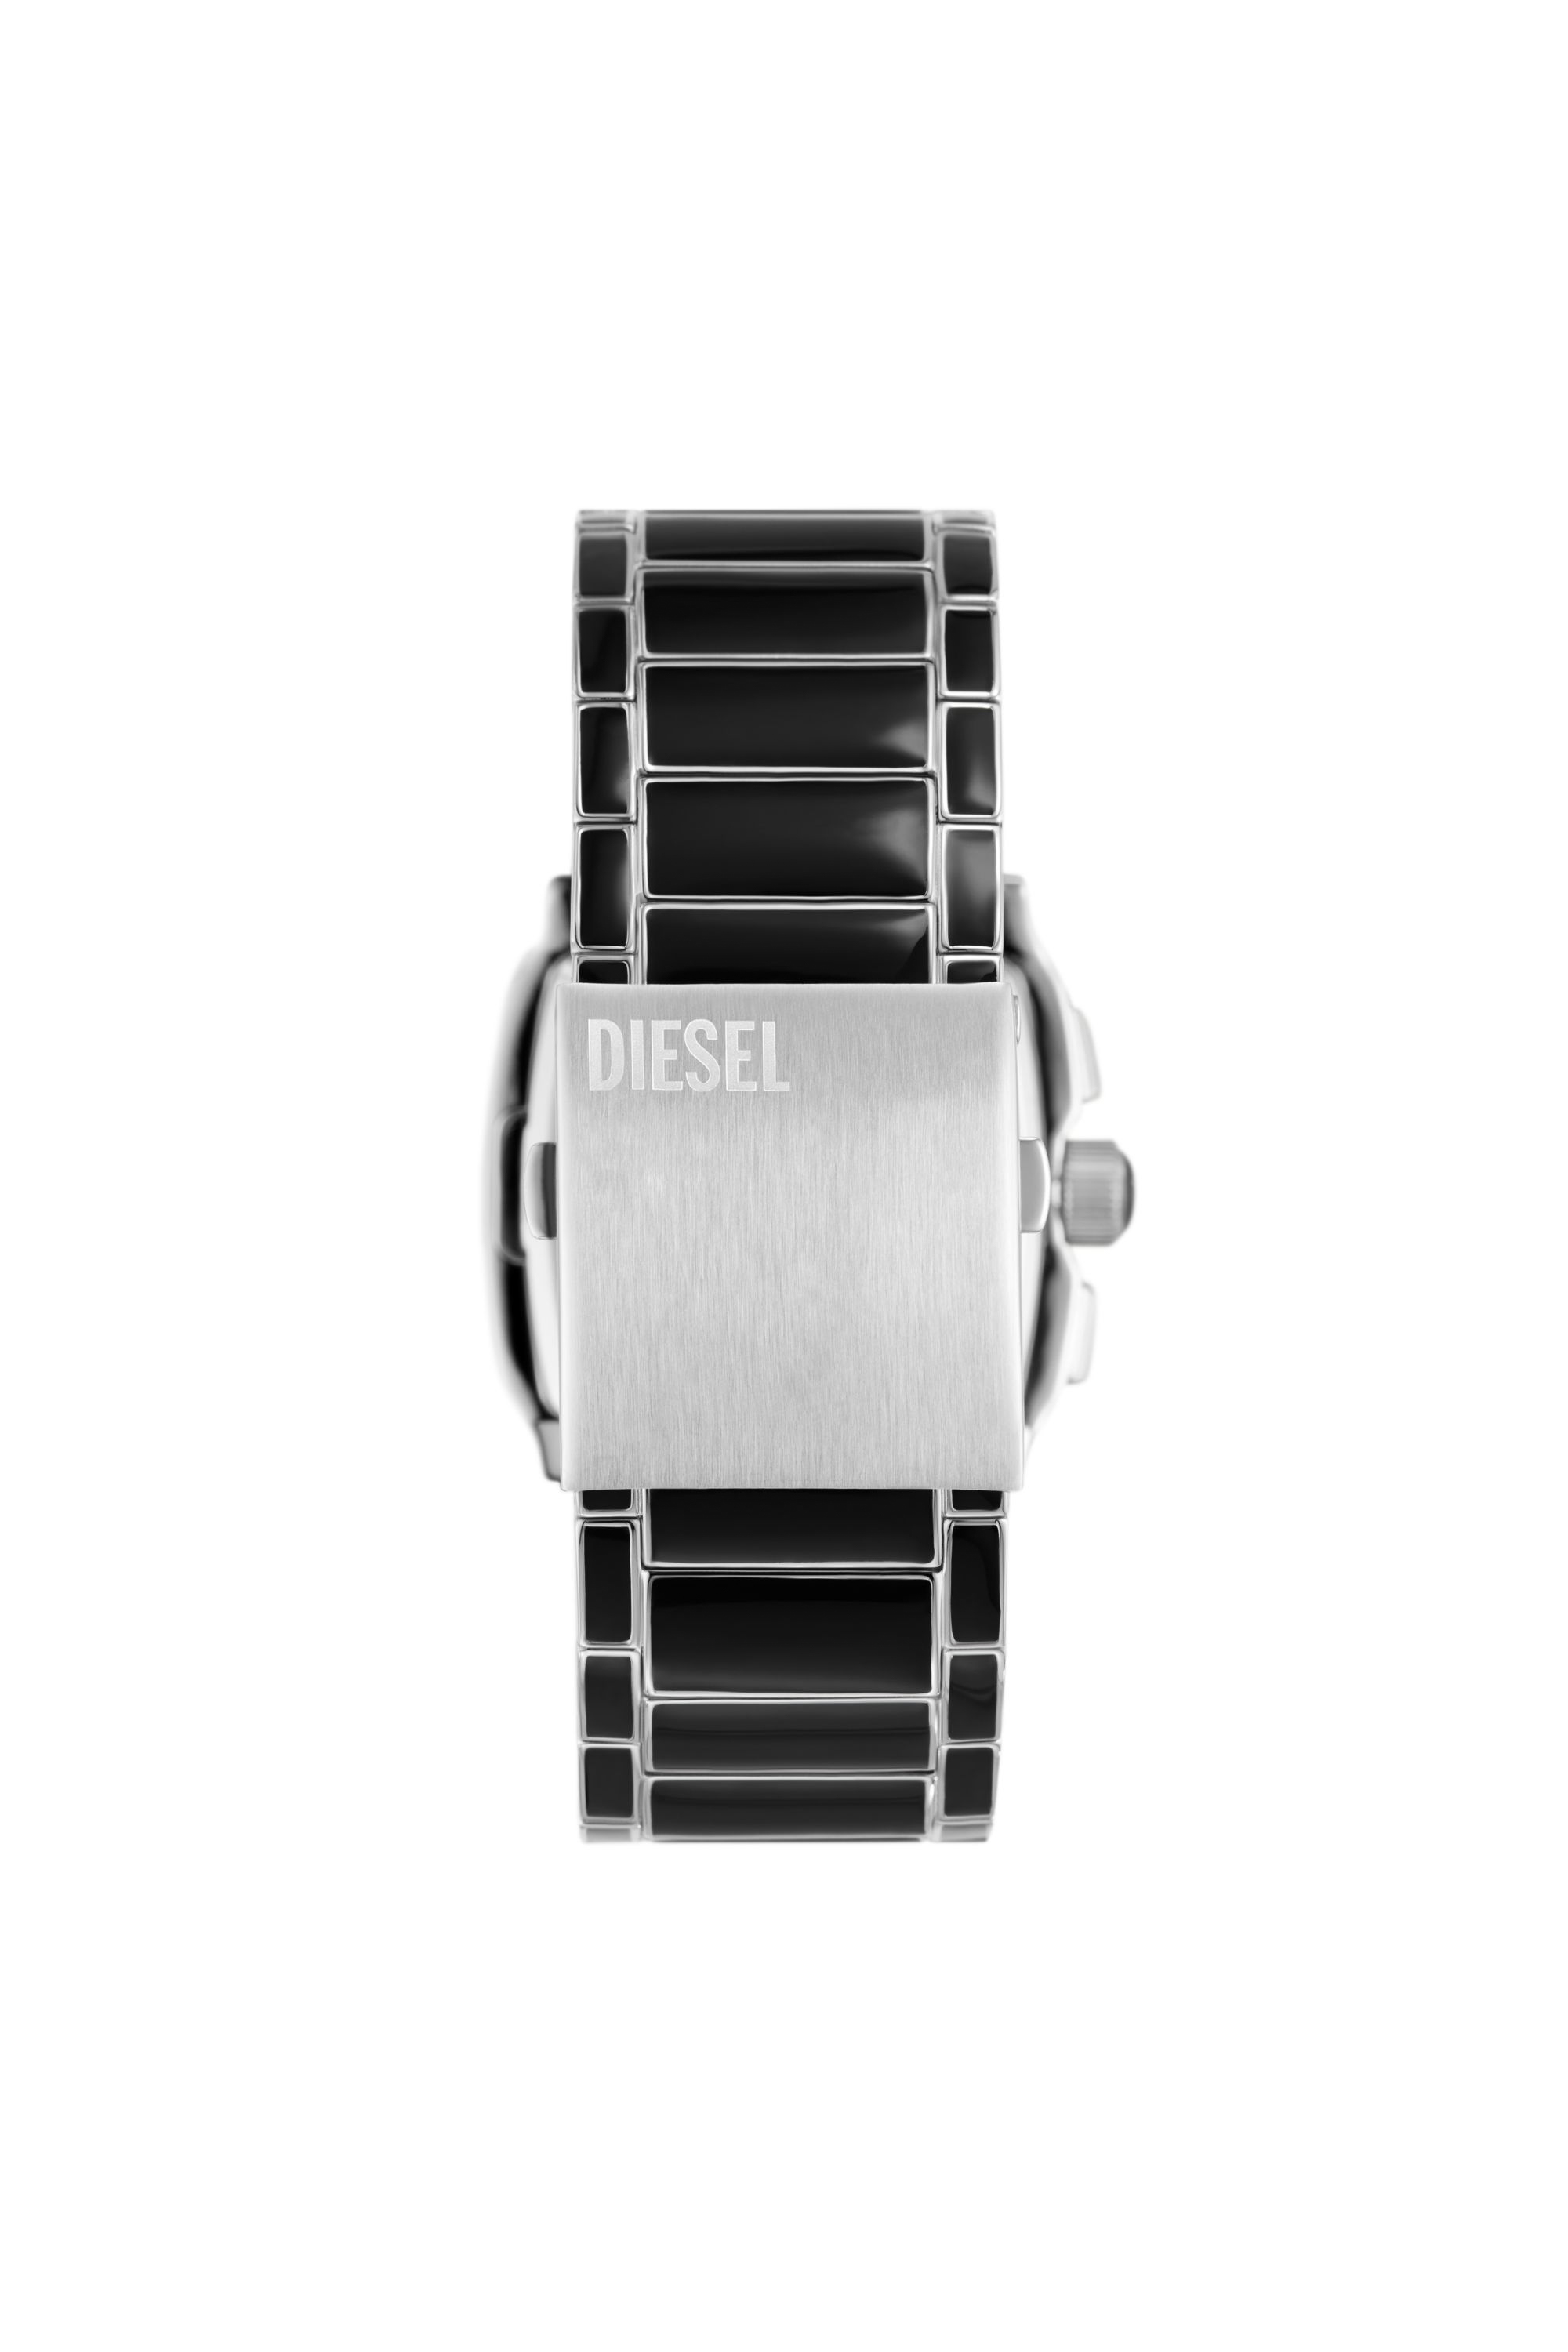 Diesel - DZ4646, Male Cliffhanger black enamel and stainless steel watch in Black - Image 2